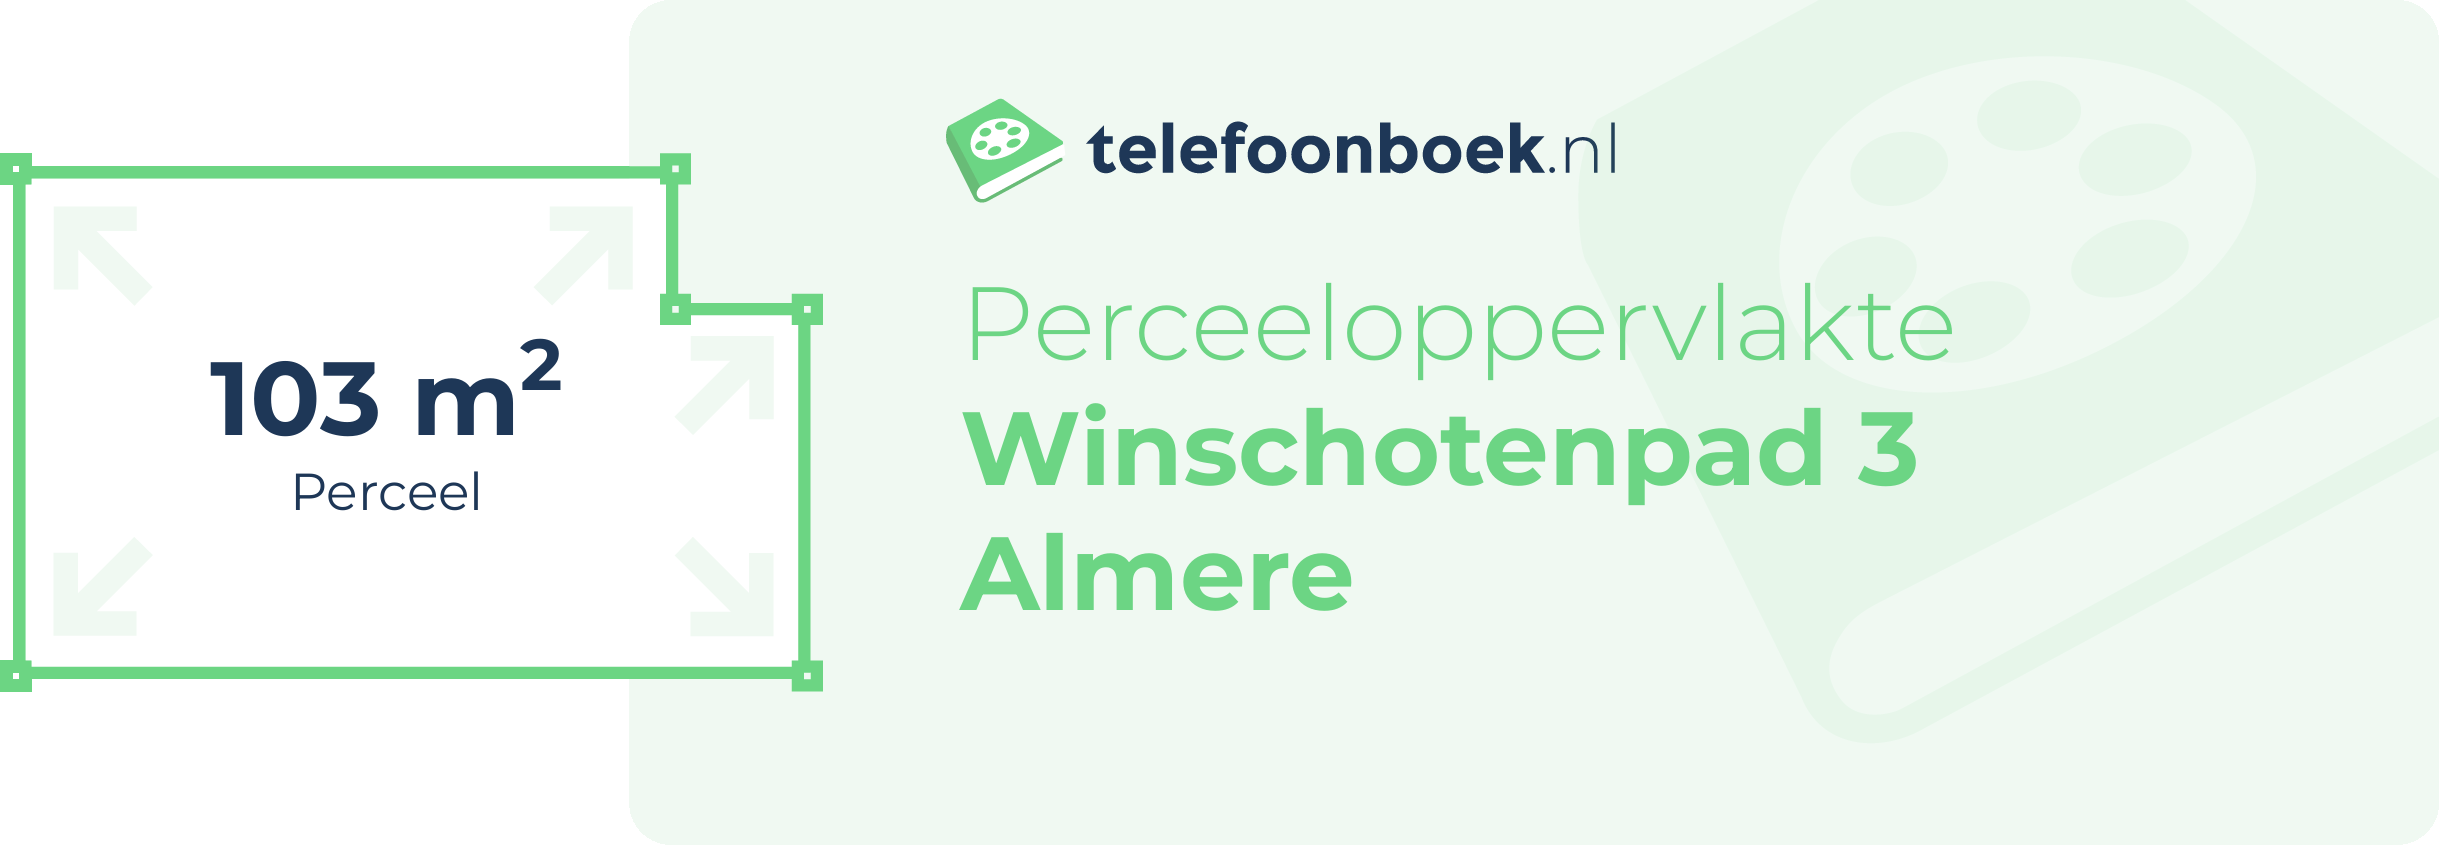 Perceeloppervlakte Winschotenpad 3 Almere